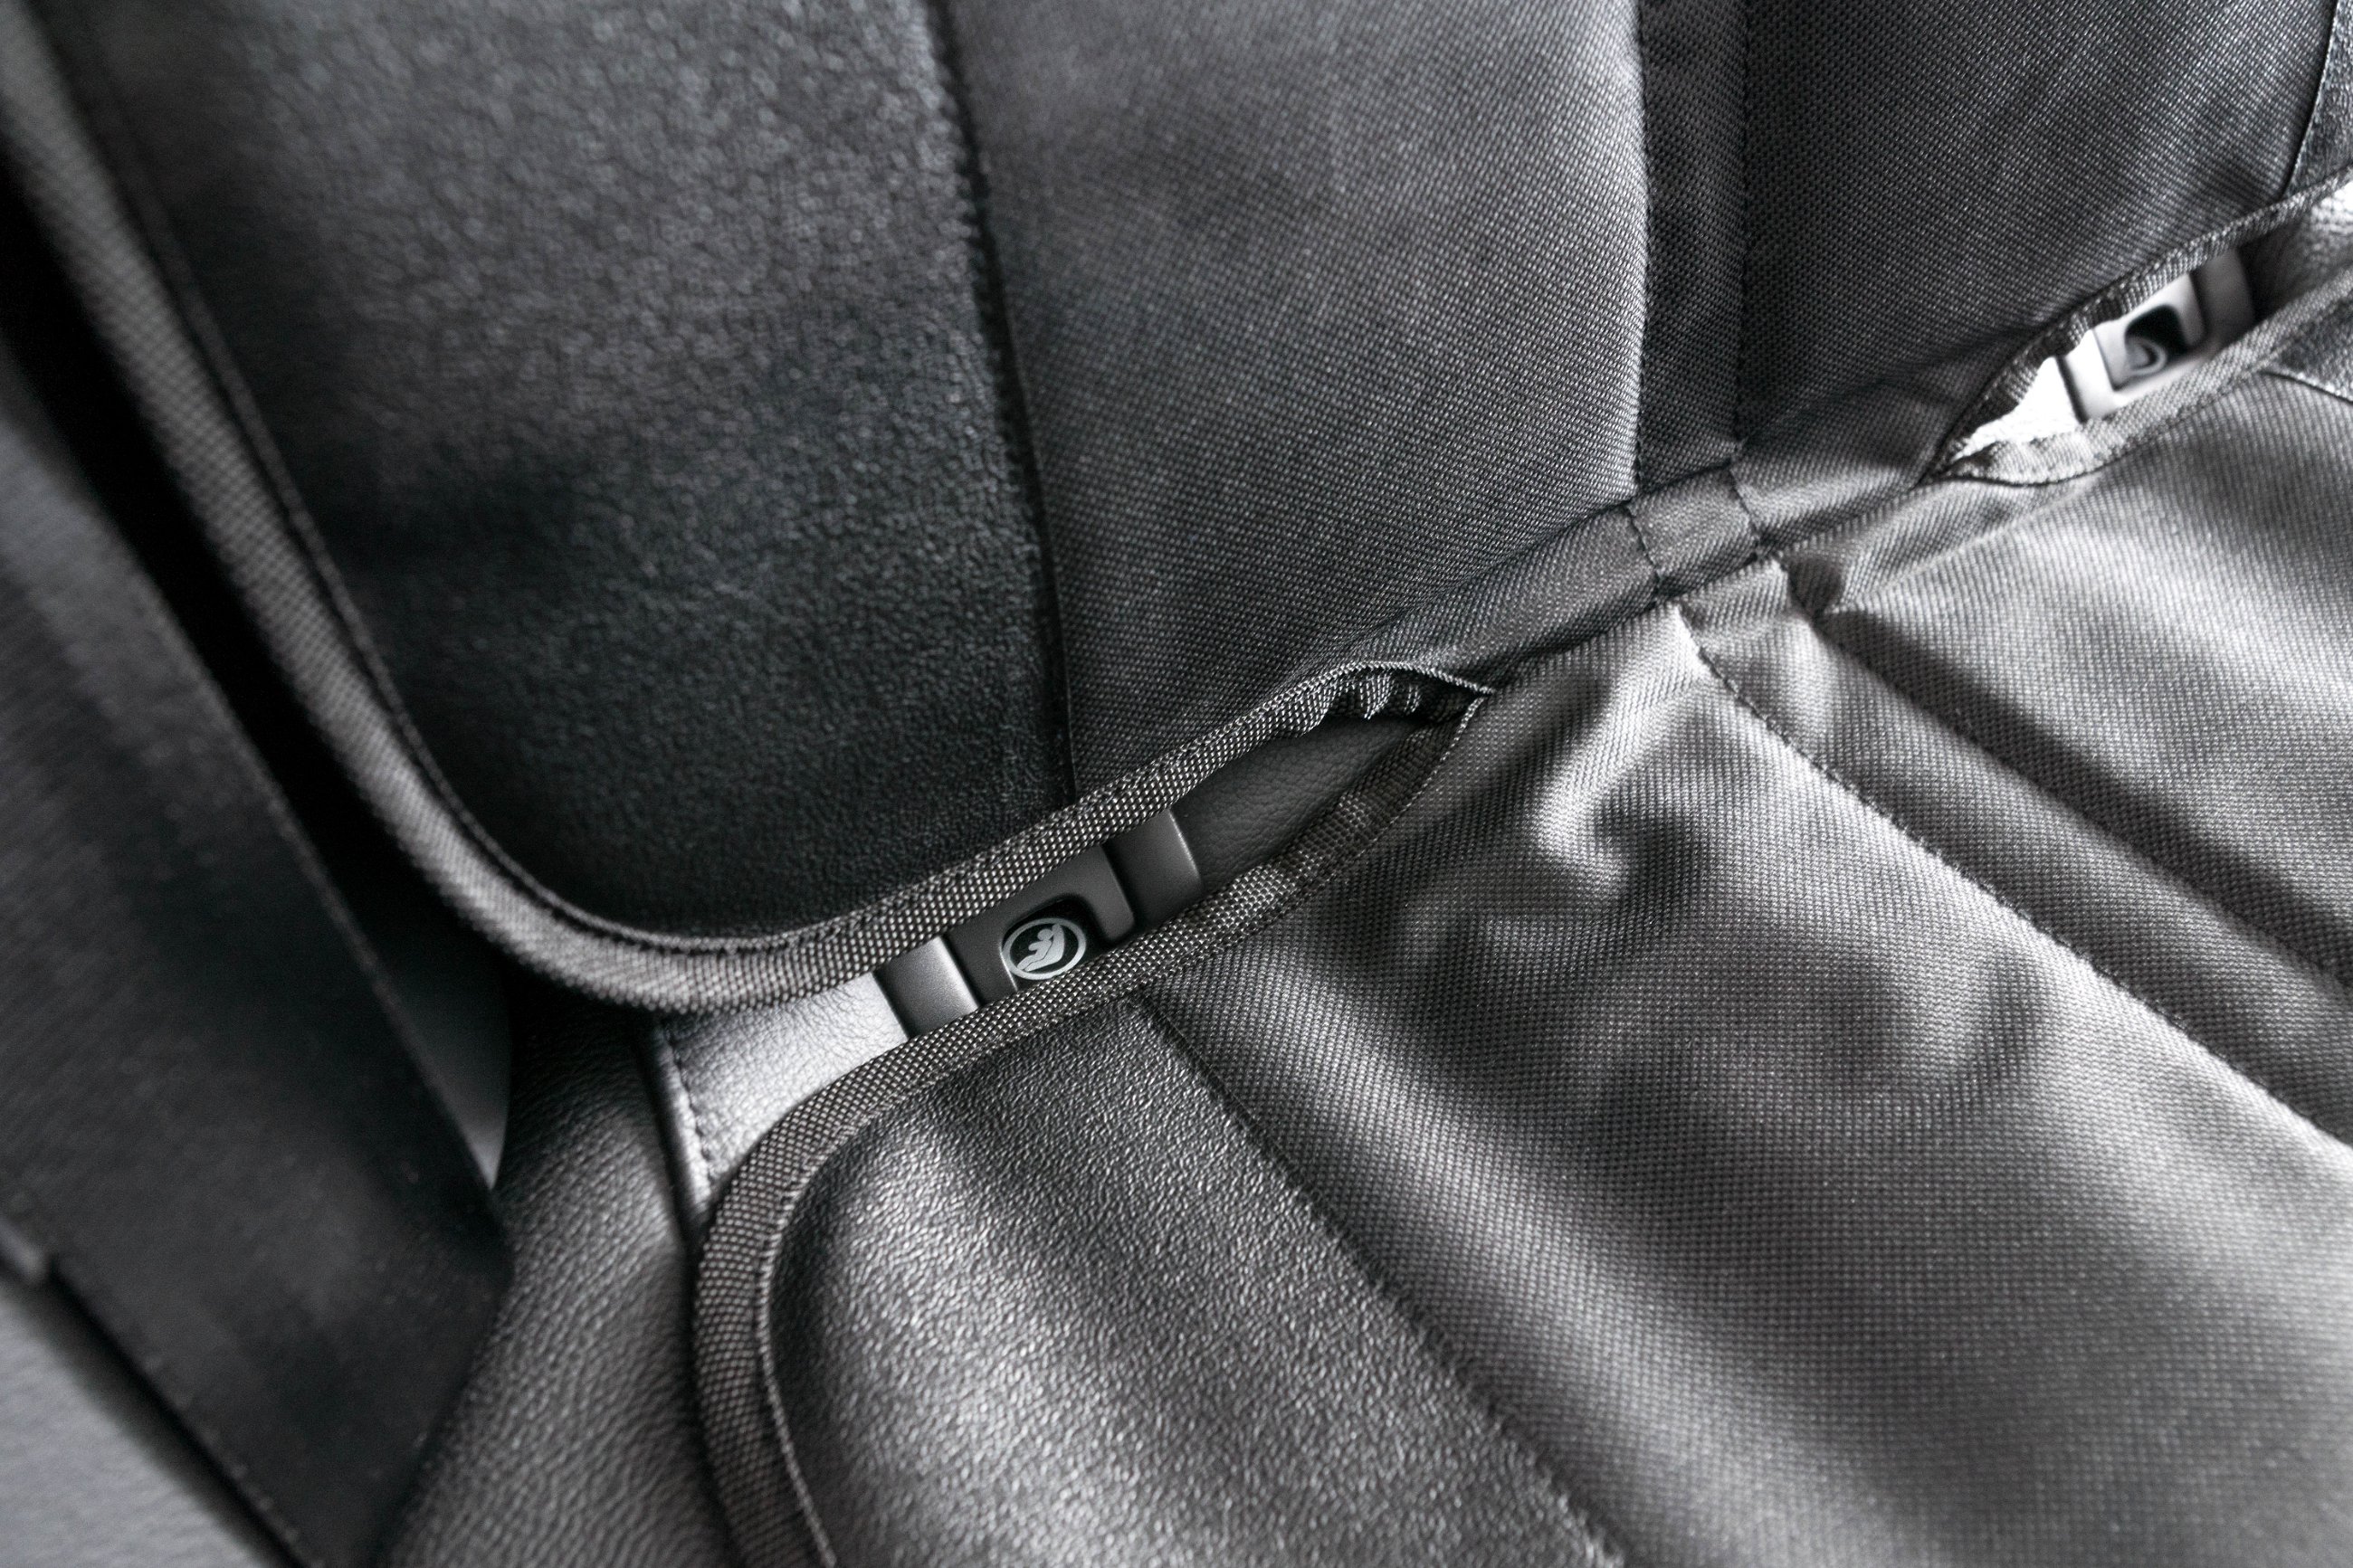 Child seat pad for car rear seat George XL Premium